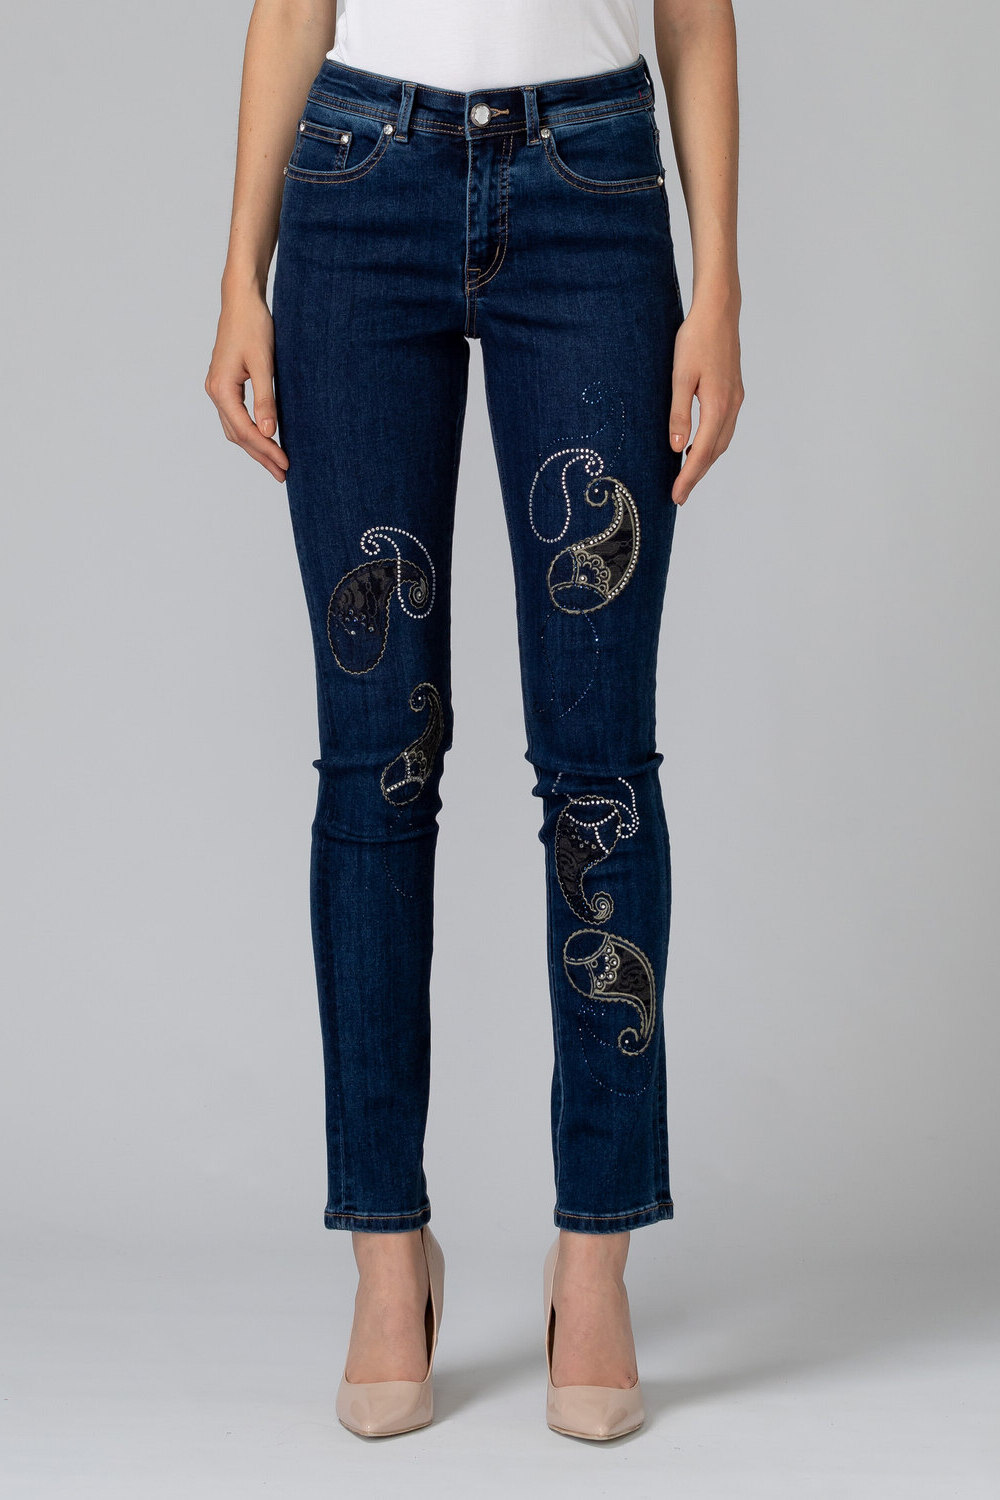 Joseph Ribkoff Jeans style 193982. Indigo